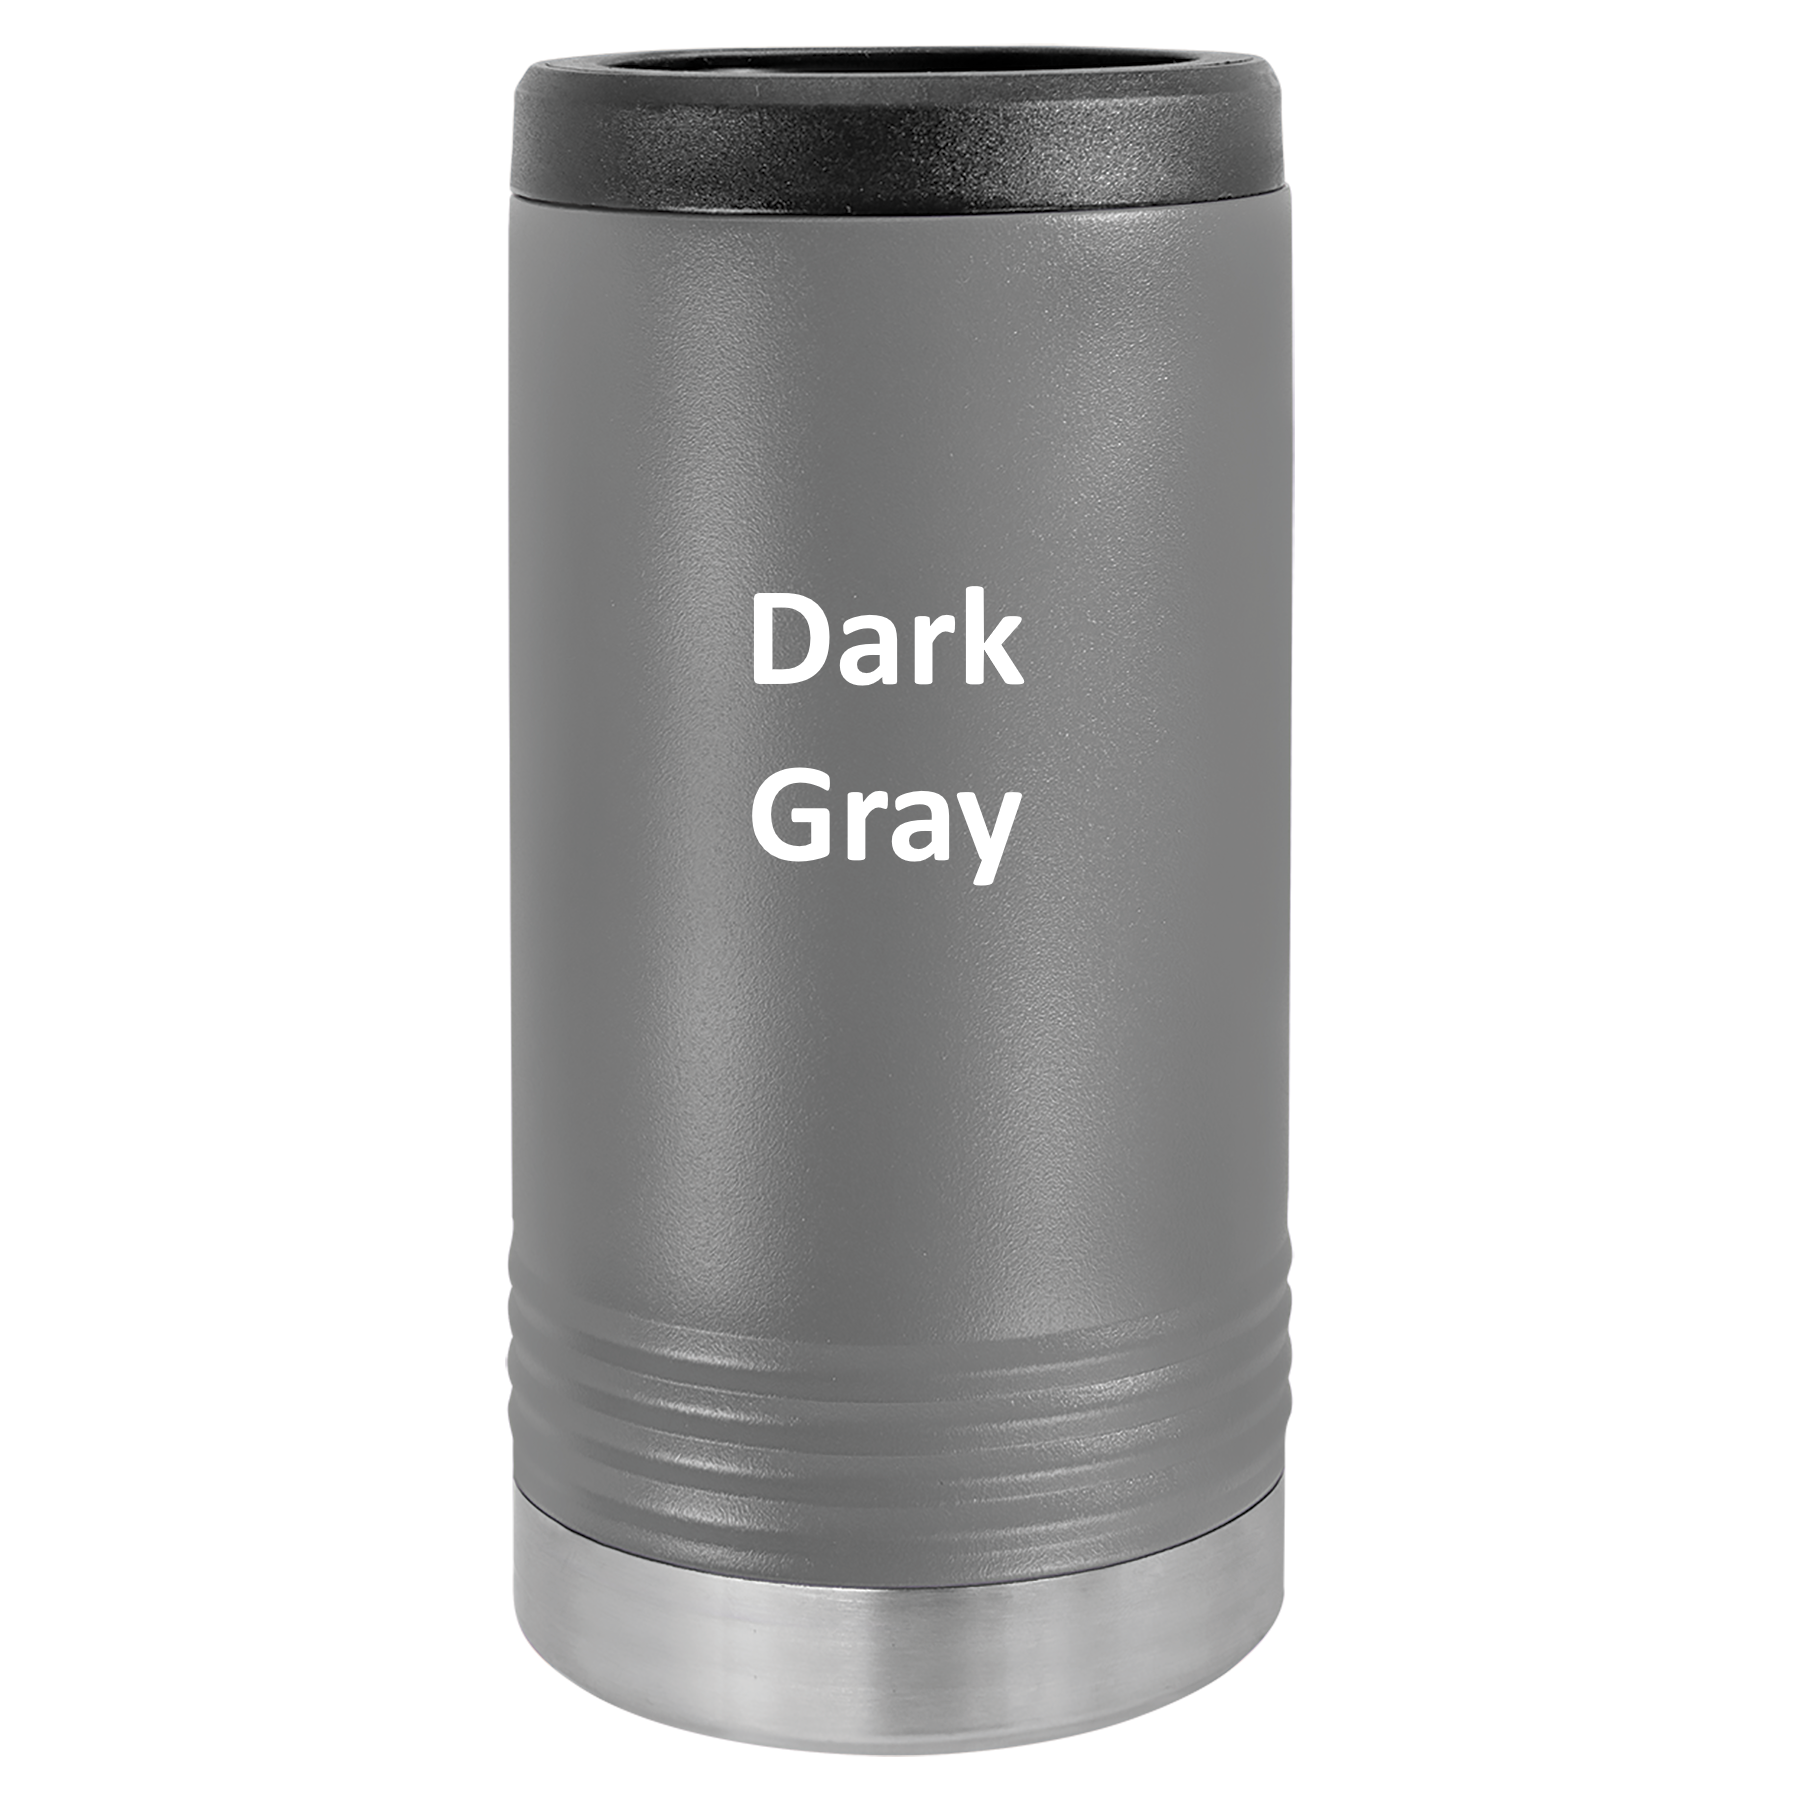 Dark Gray 12oz Slim Beverage Holder